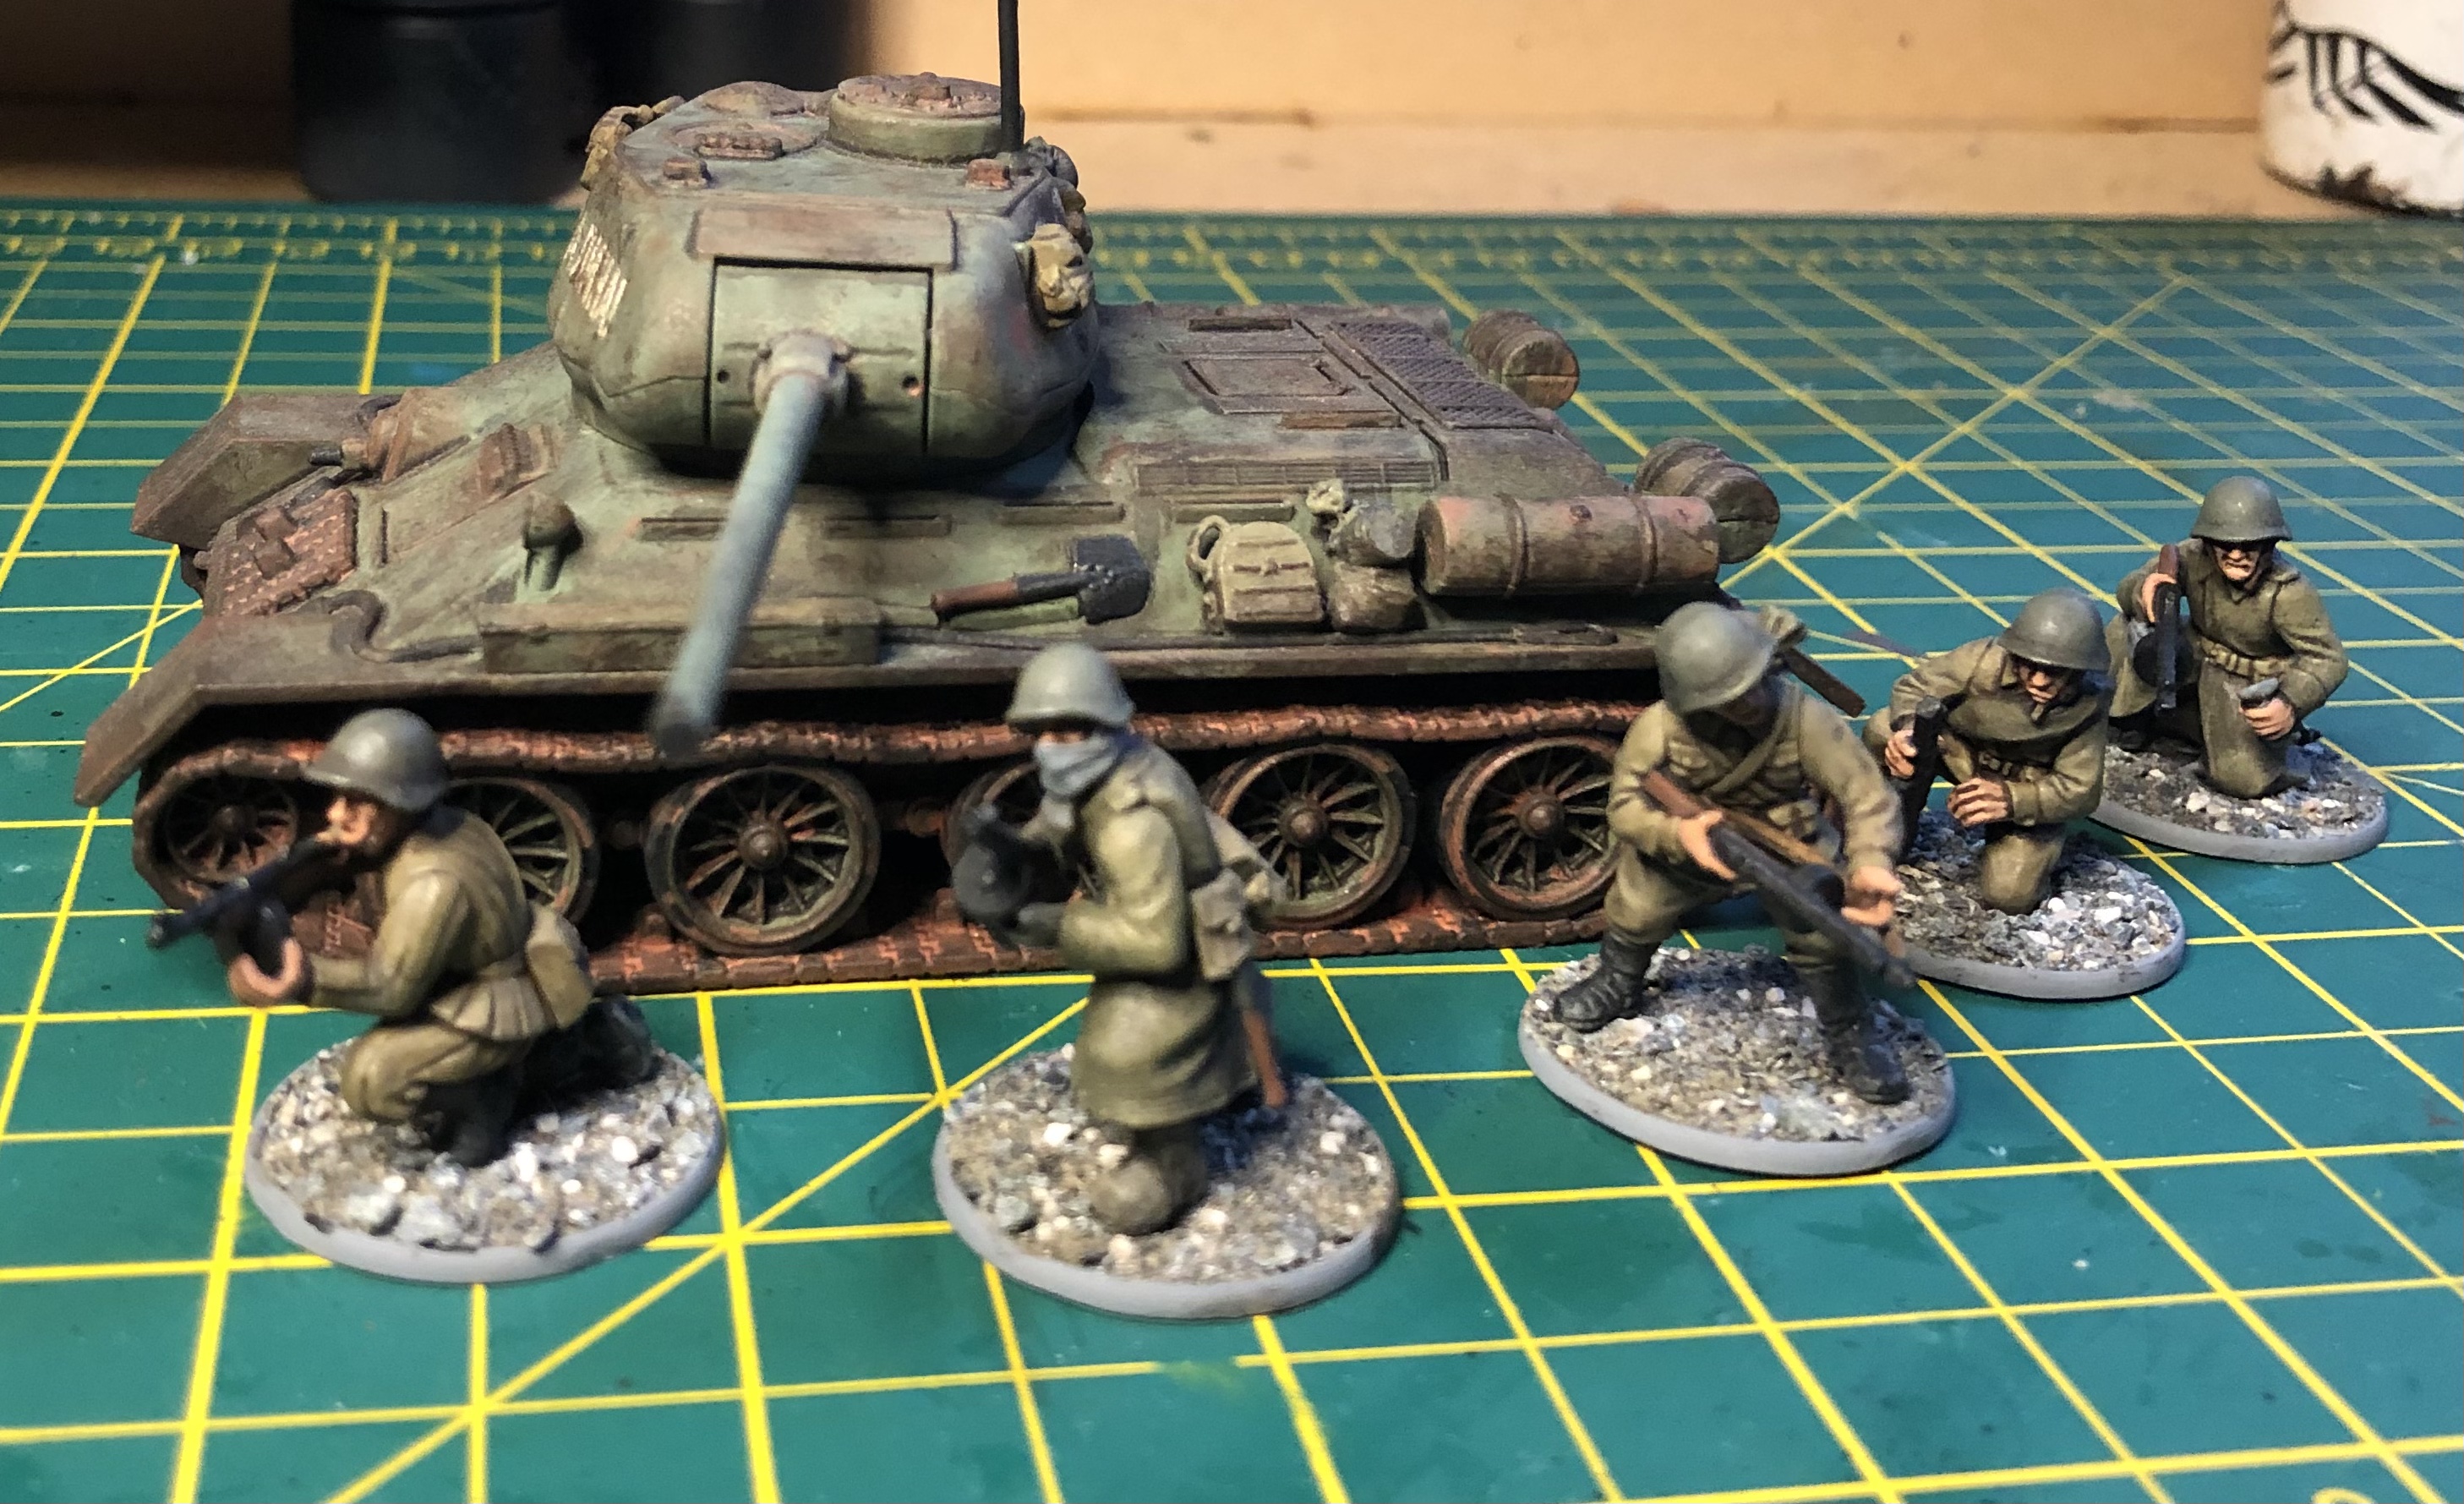 Soviet Tank Riders #3 by harry711